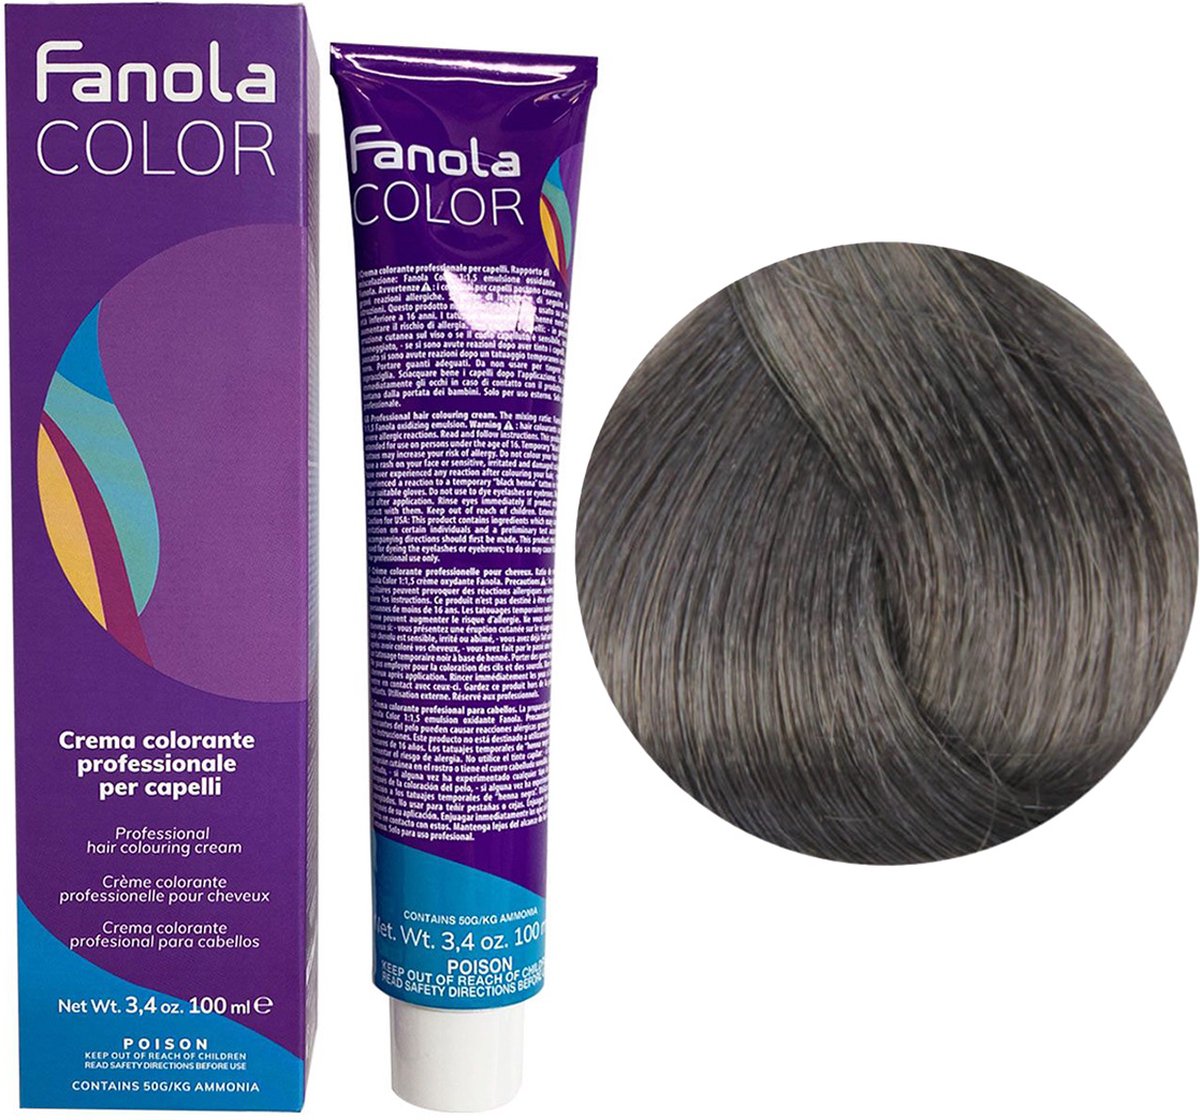 Narabar Urskive tempo Fanola Haarverf Professional Colouring Cream 8.11 Light Blonde Intense Ash  | bol.com